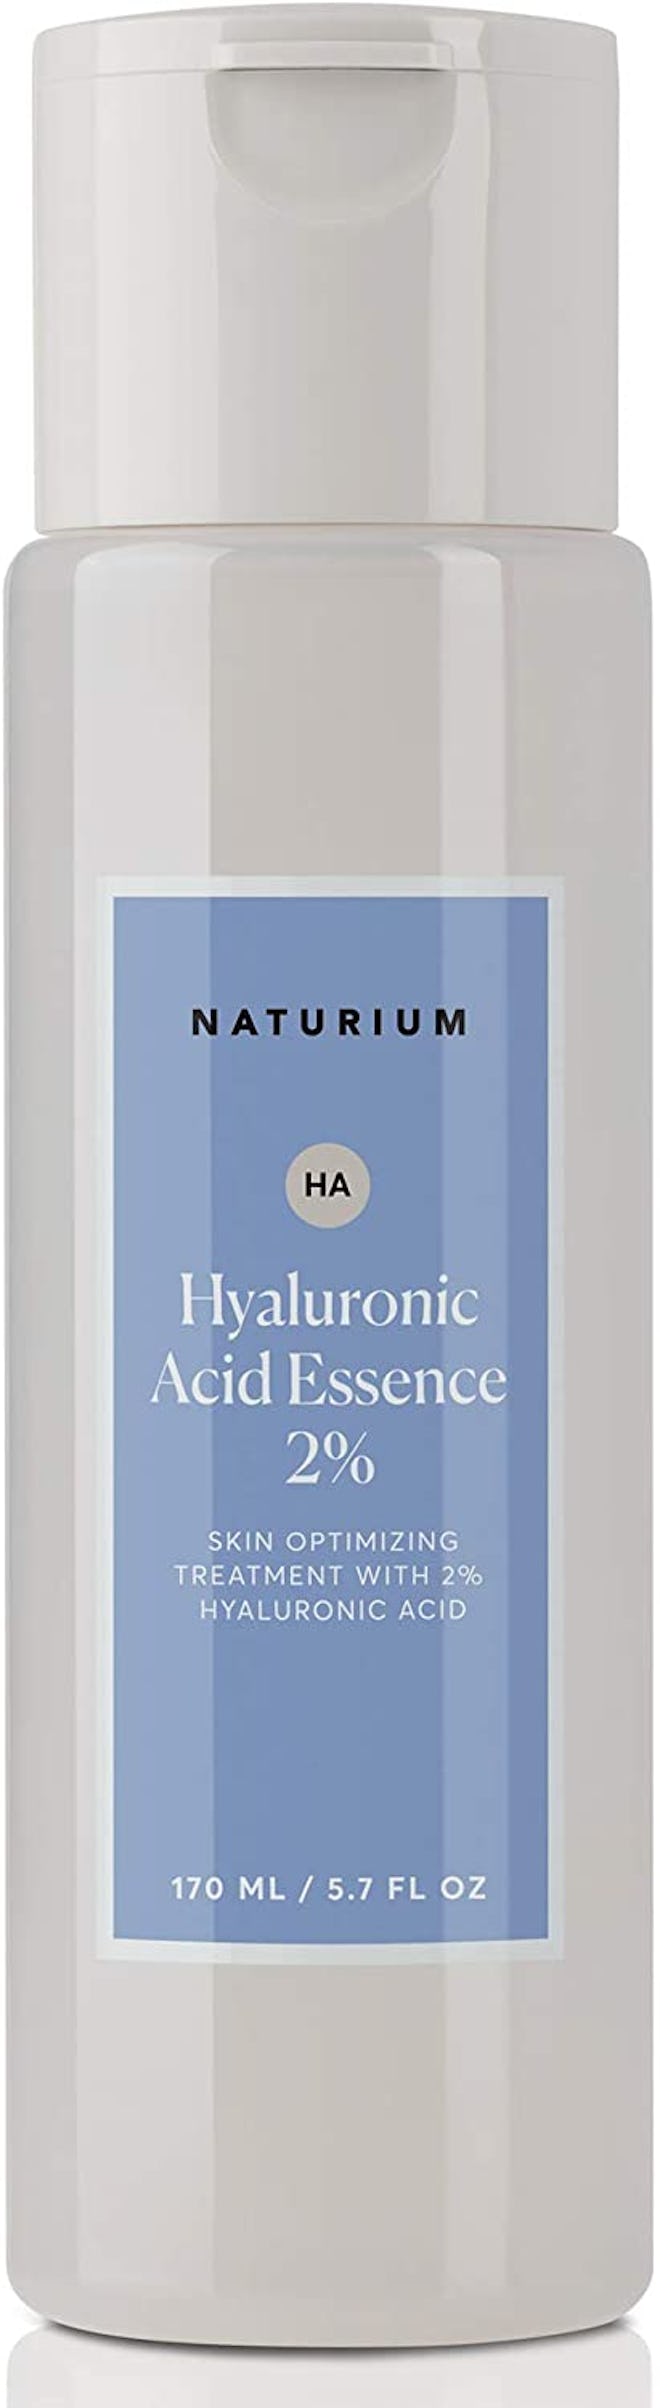 Naturium Hyaluronic Acid Essence 2% 